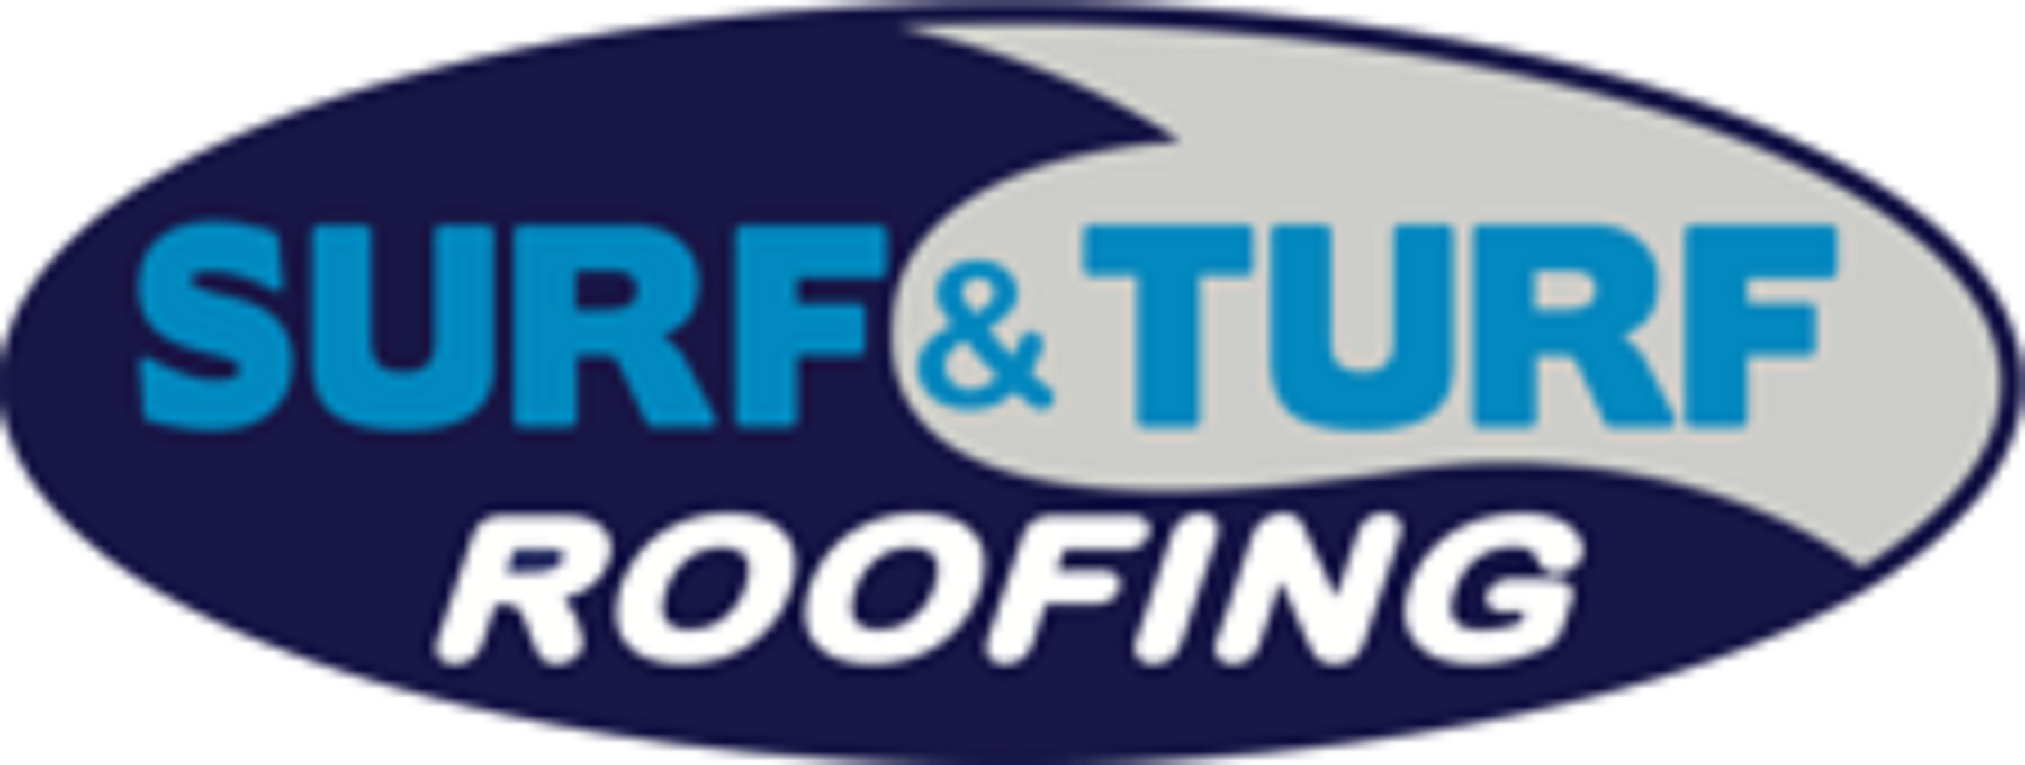 Surf & Turf Construction, LLC Logo